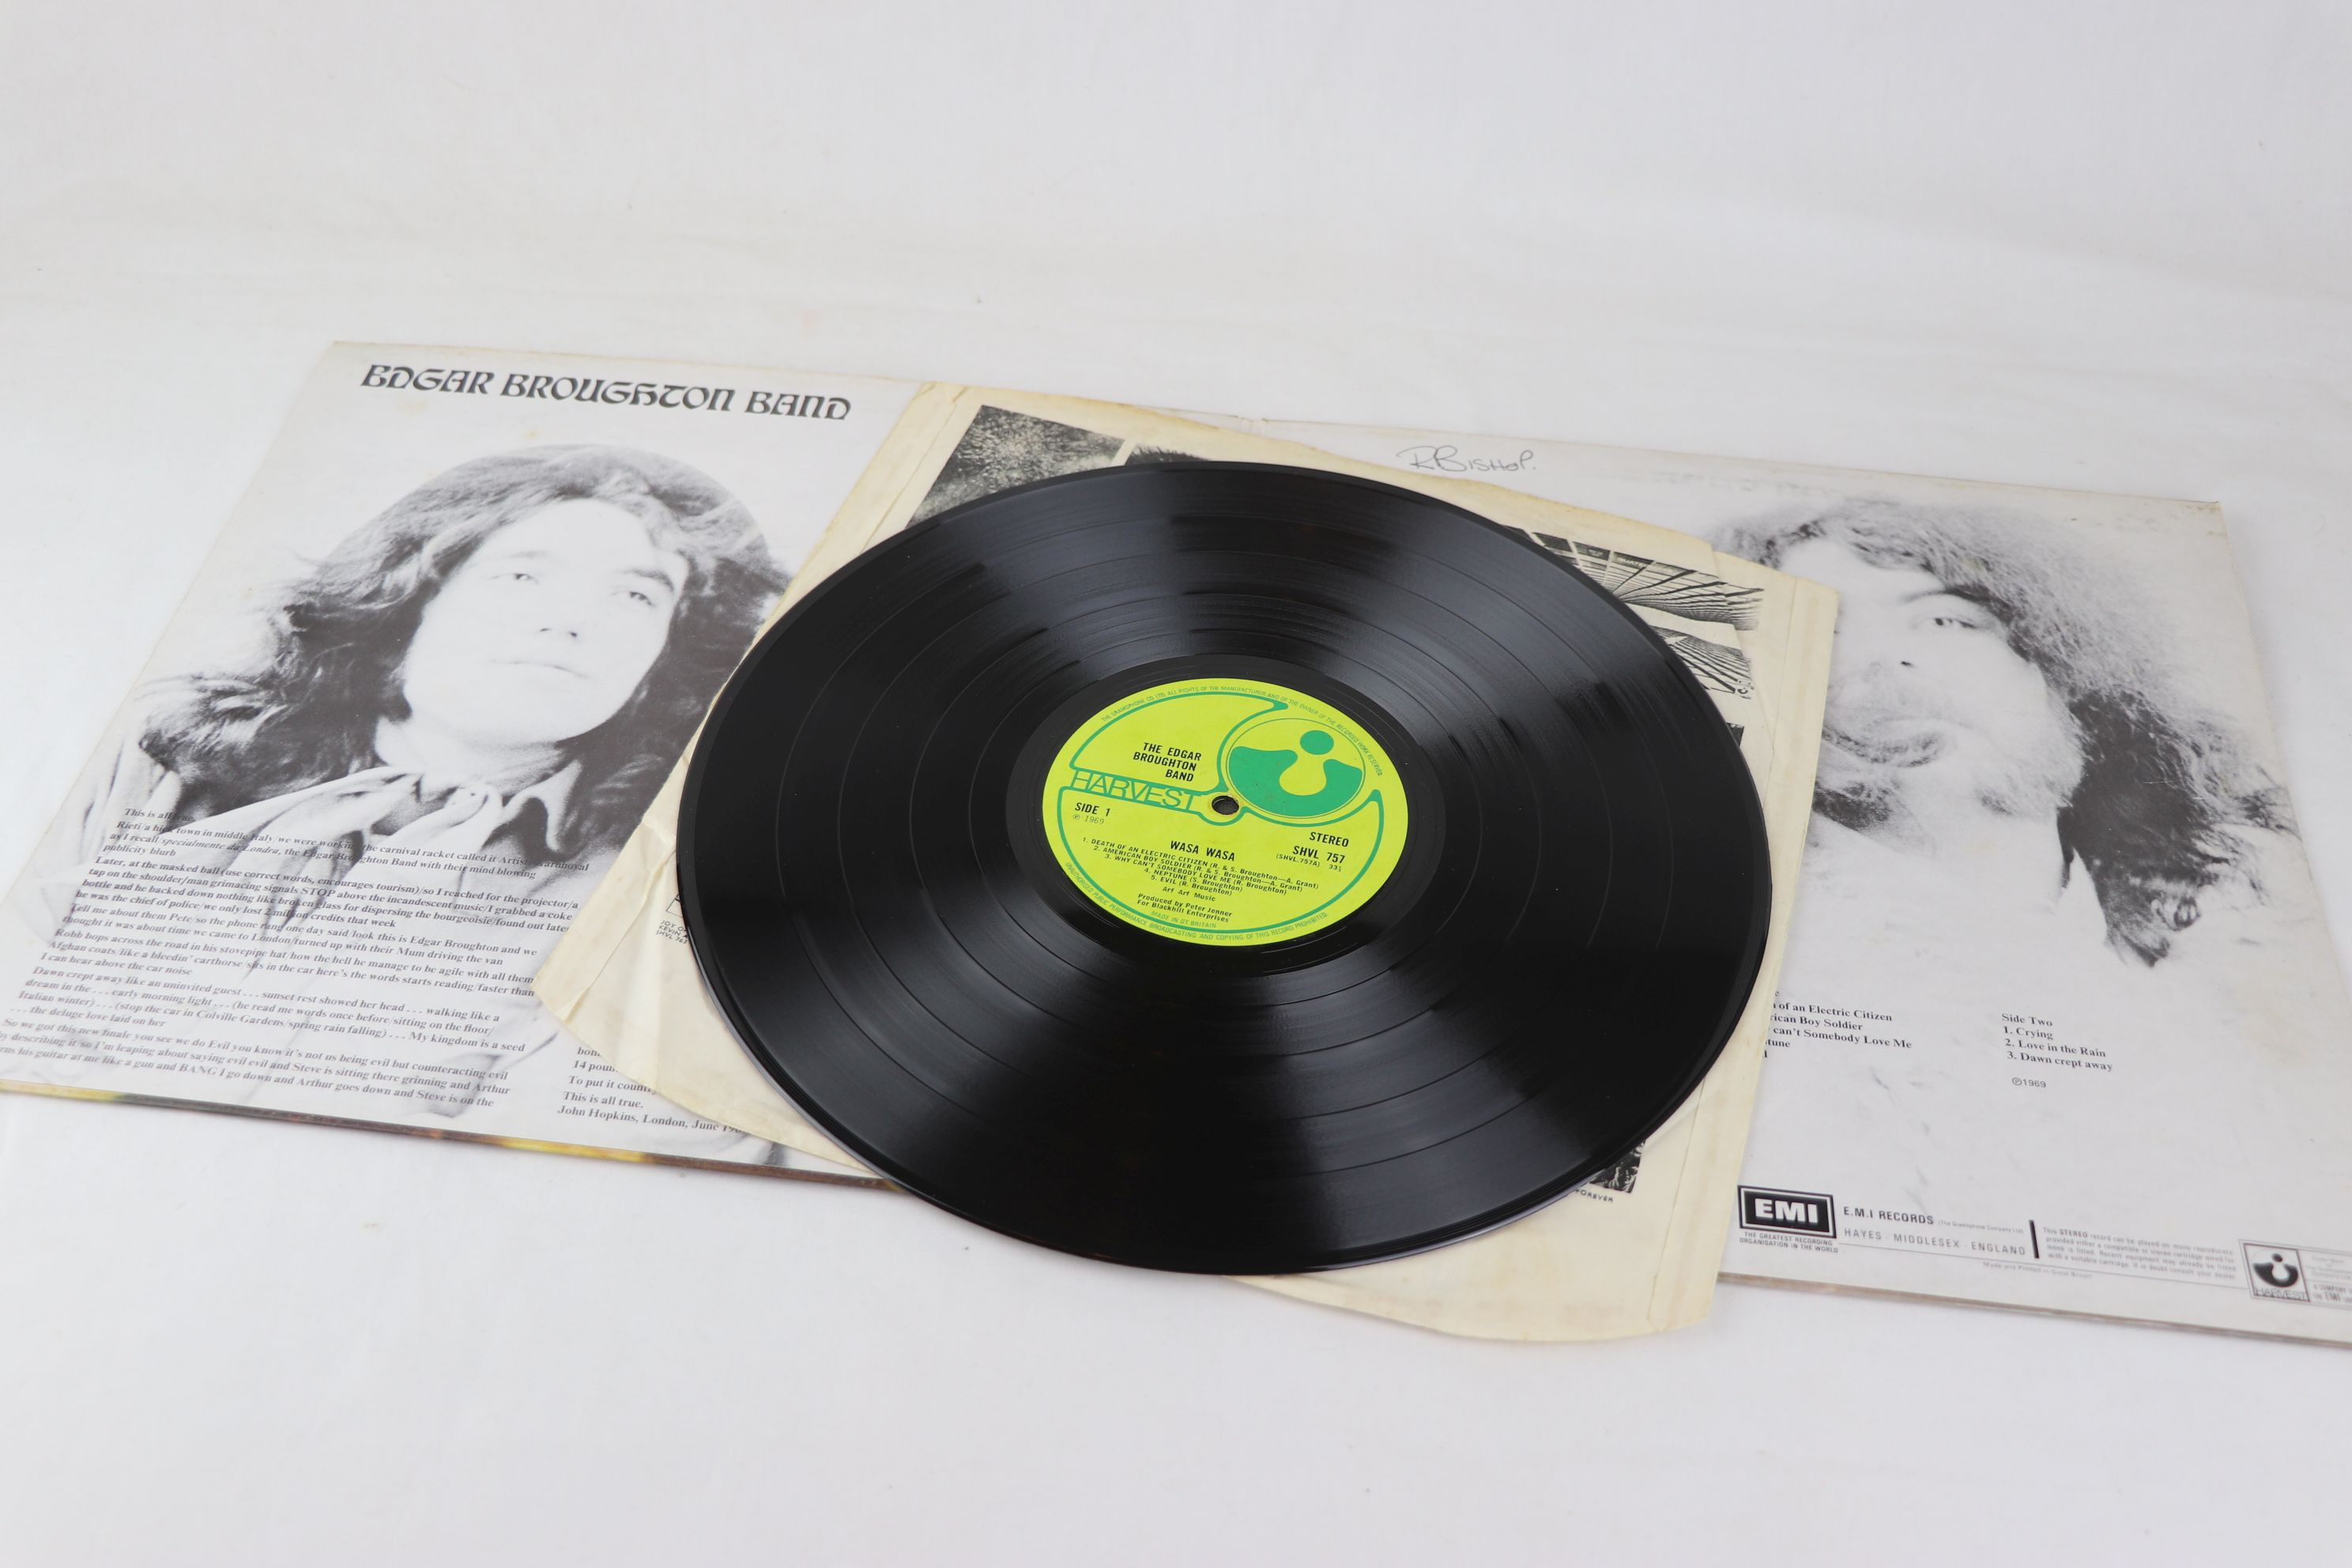 Vinyl - Edgar Broughton Band Wasa Wasa (SHVL 757) no EMI on label or Sold In UK, Harvest advertising - Image 3 of 7